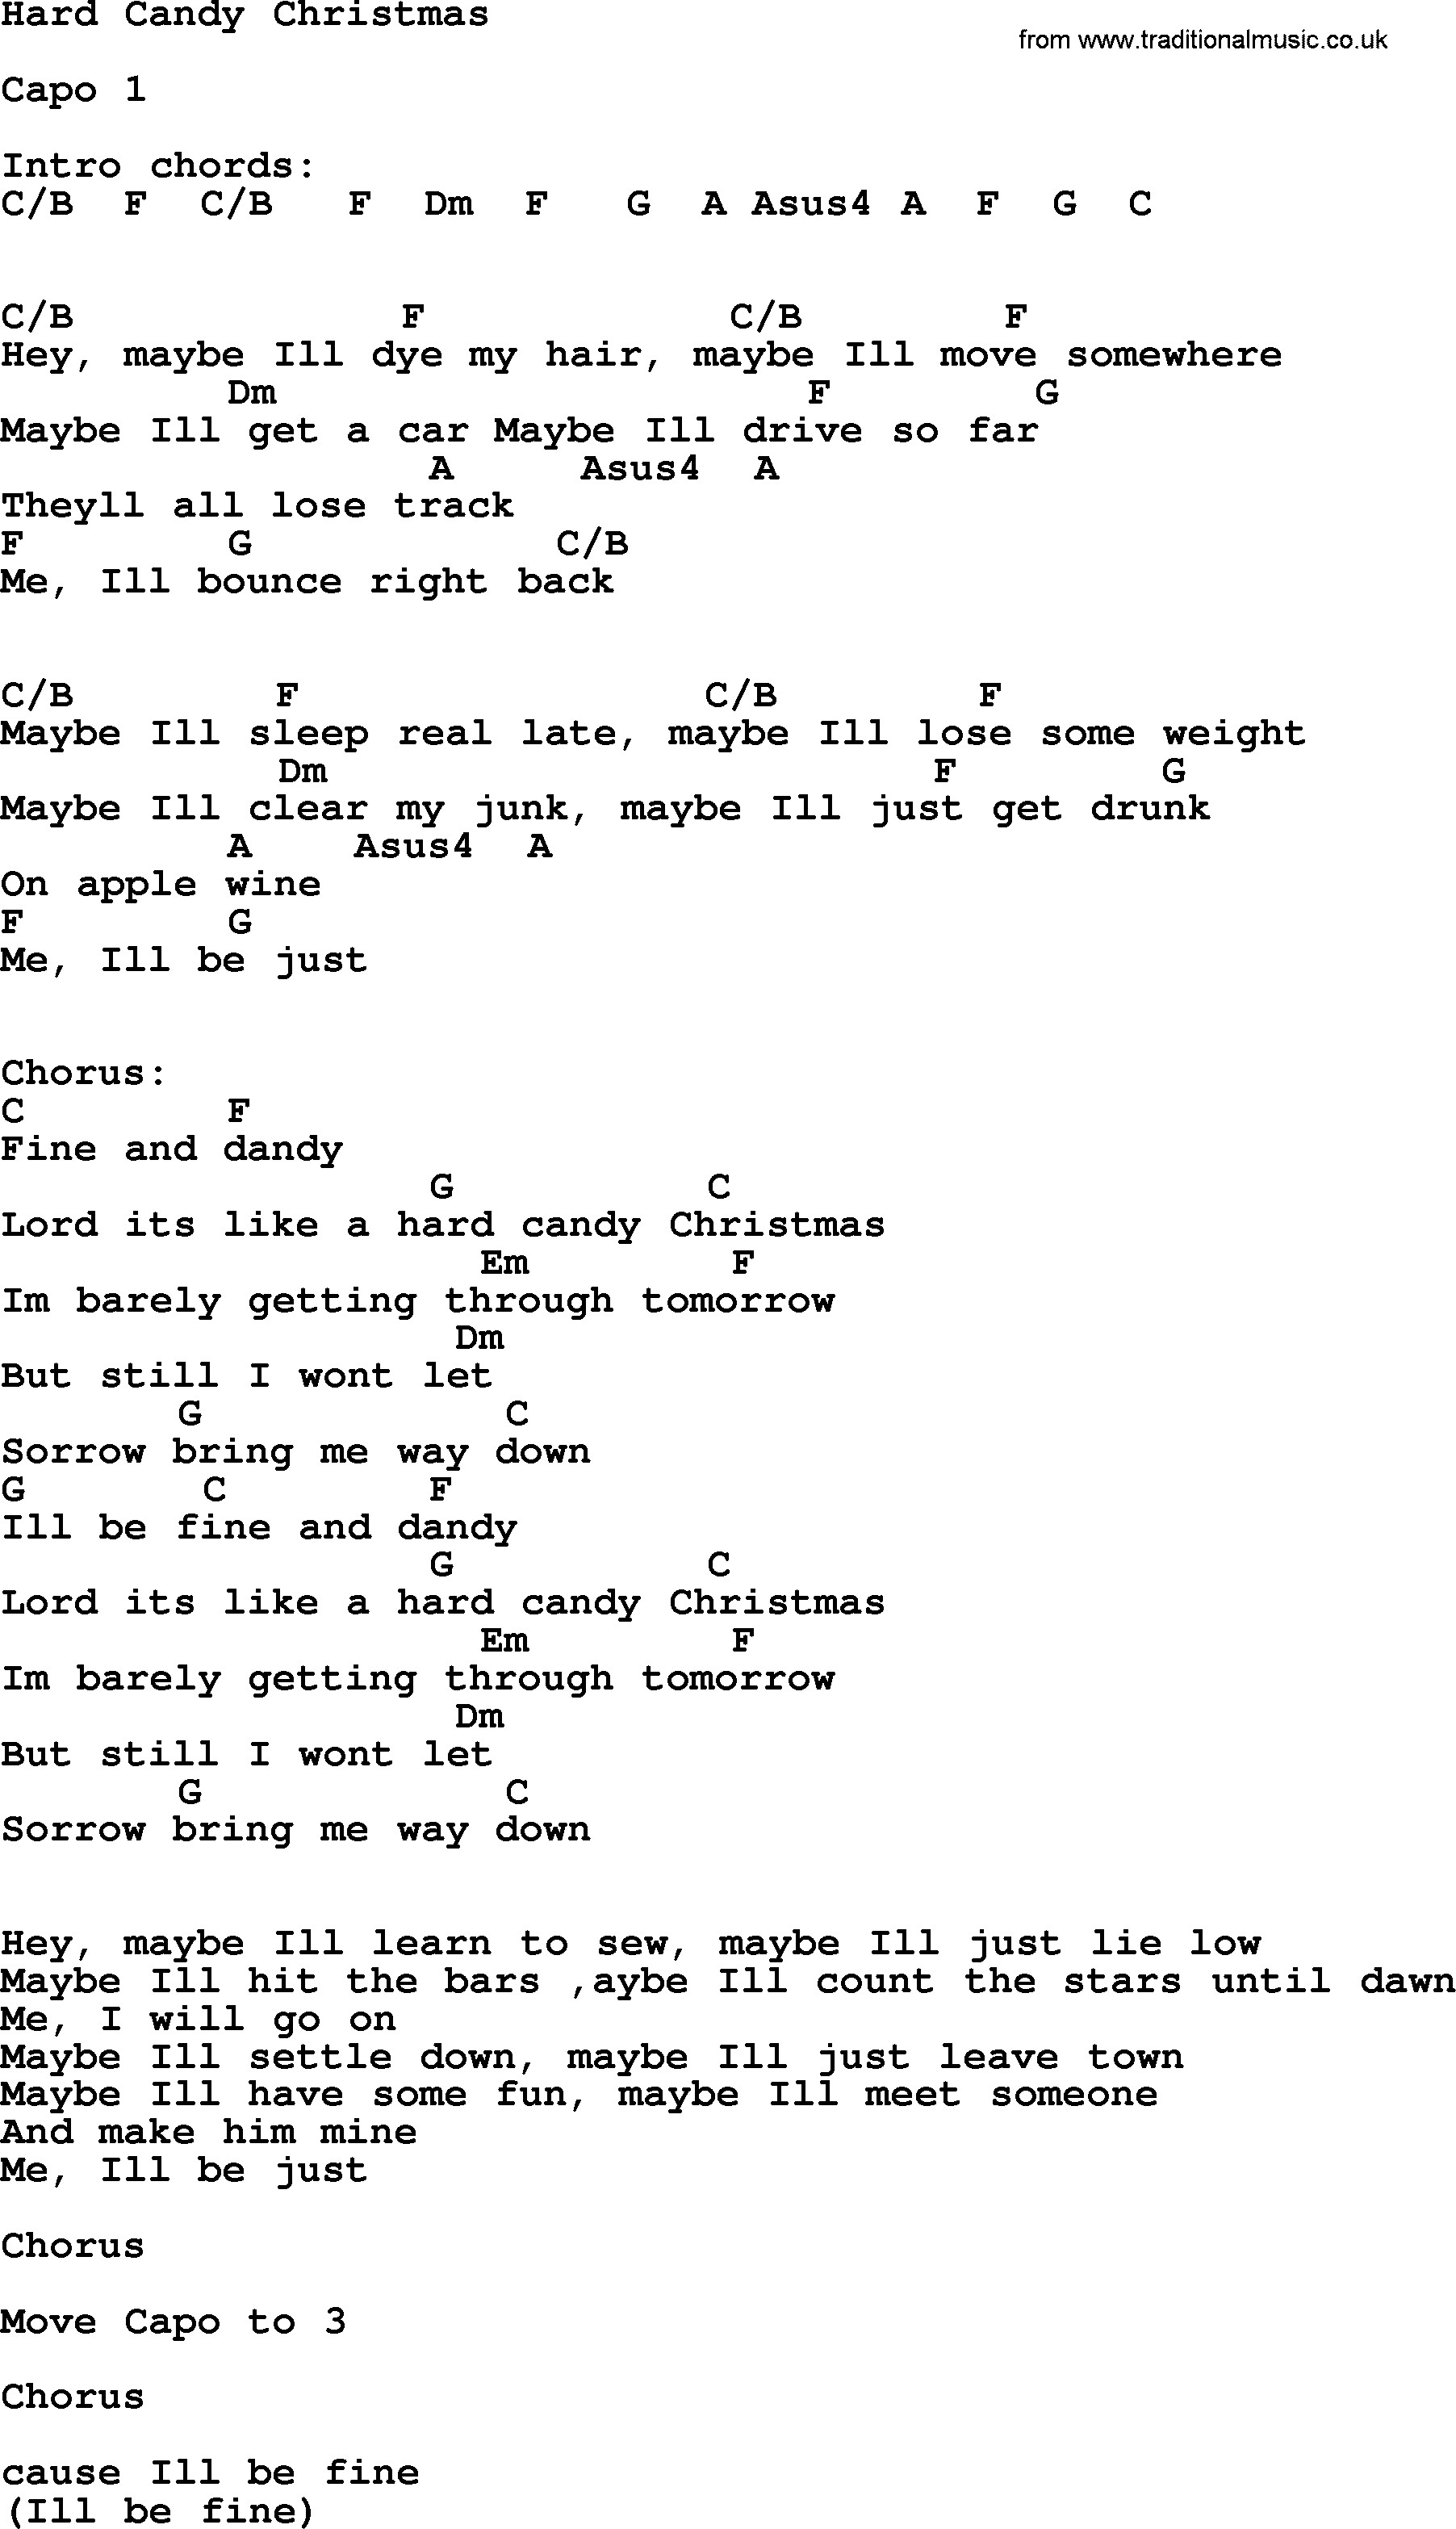 Hard Candy Christmas Lyrics
 Dolly Parton song Hard Candy Christmas lyrics and chords